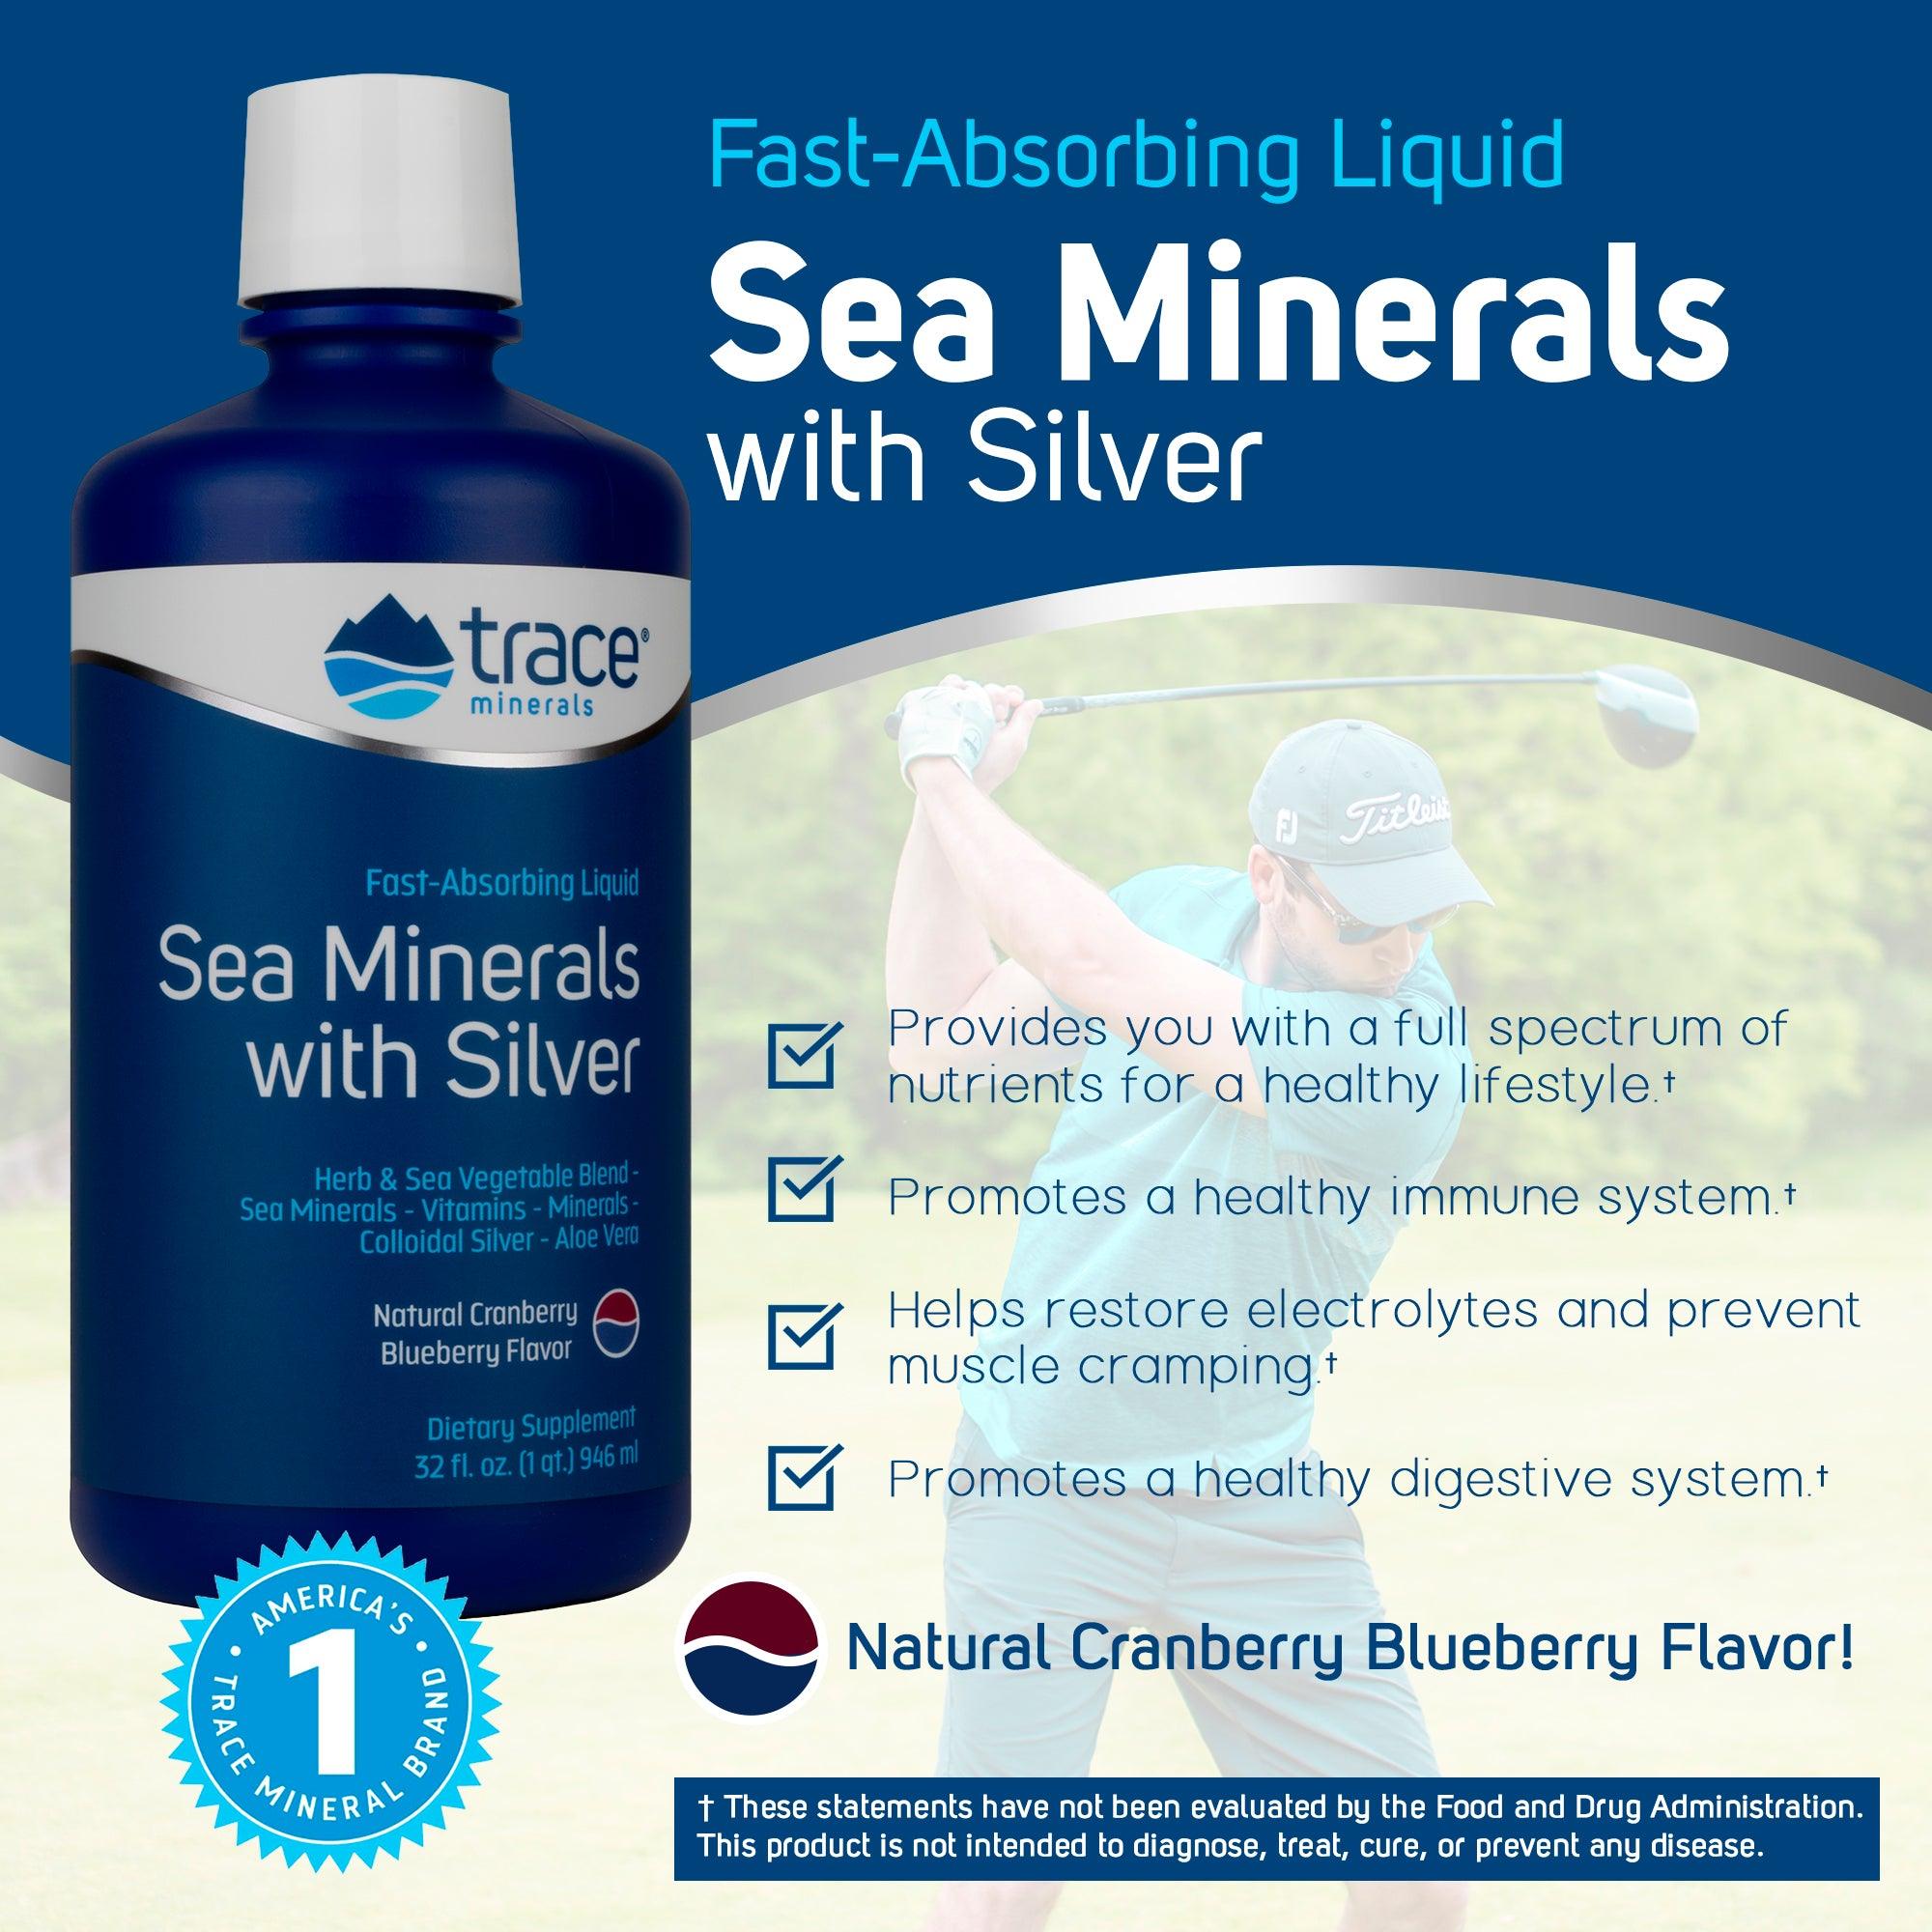 Sea Minerals with Silver - Trace Minerals